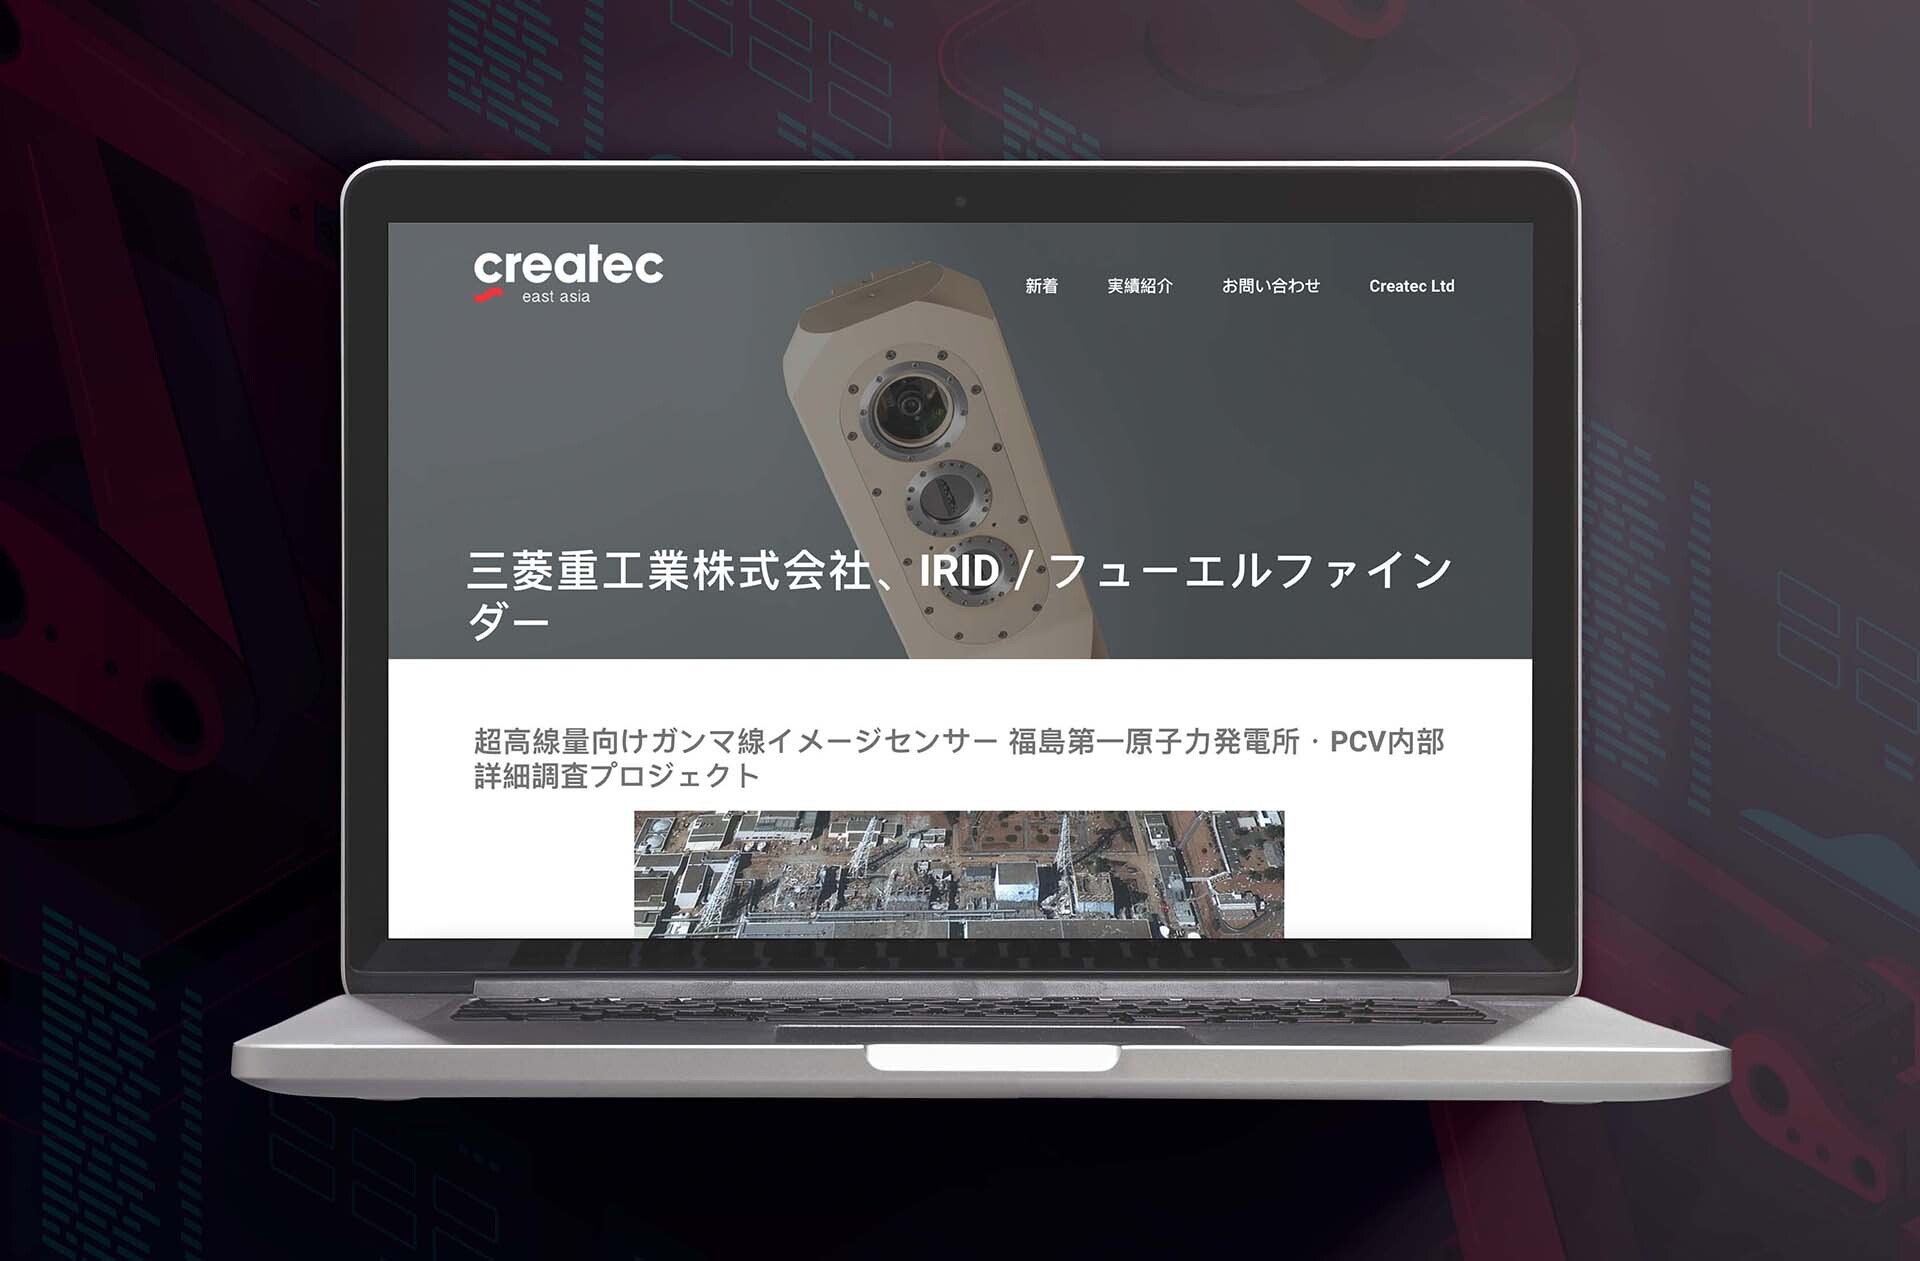 Createc Japan news post landing page